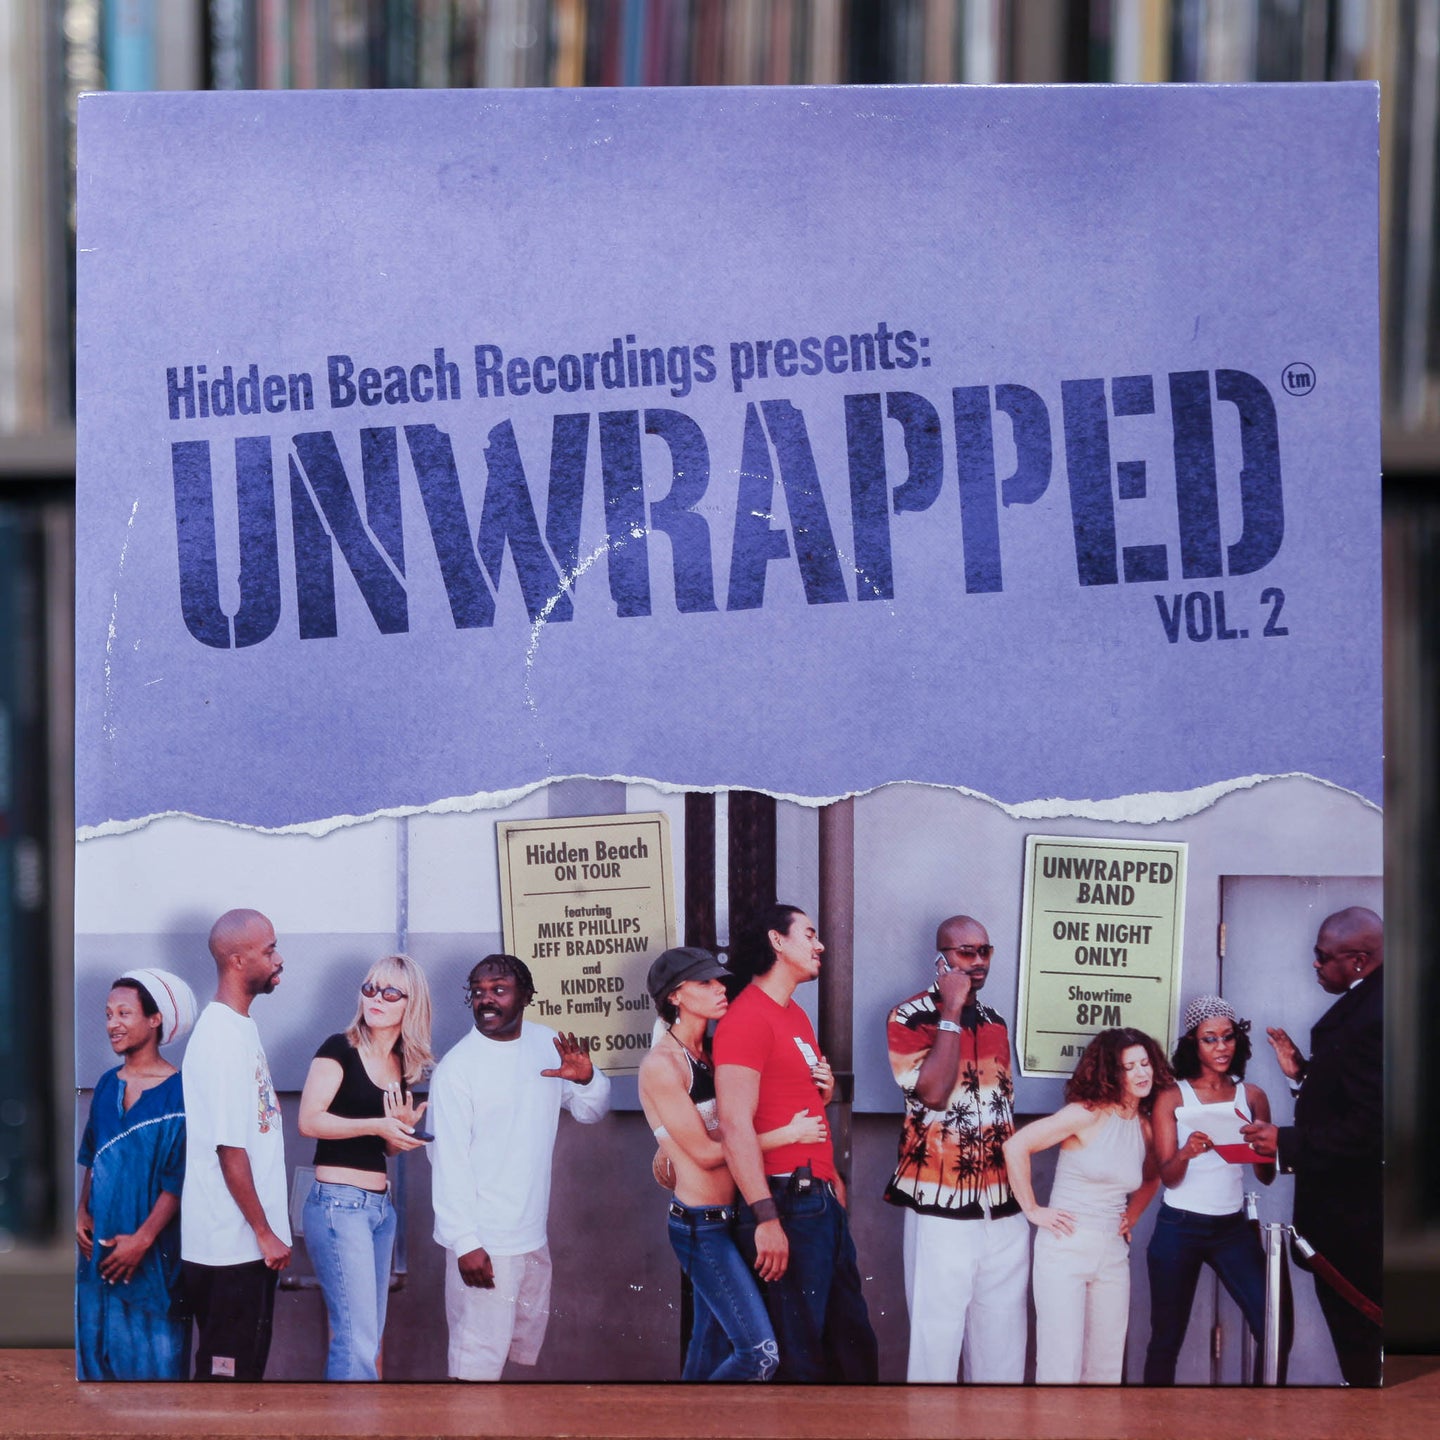 Unwrapped Vol. 2 - 2LP - 2002 Hidden Beach, VG+/VG+